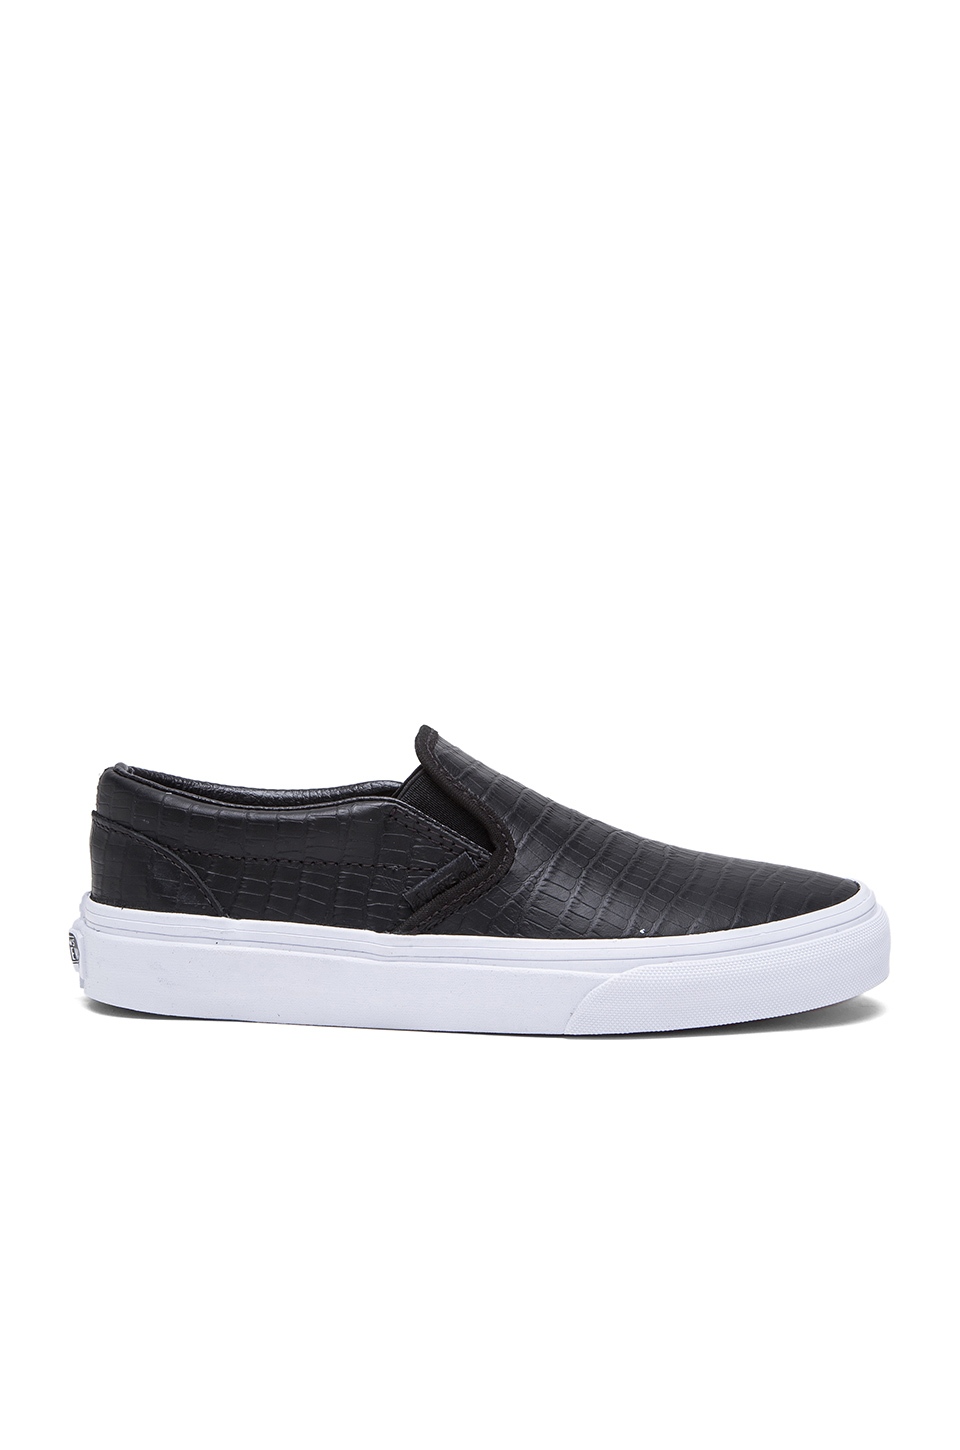 Lyst - Vans Classic Croc Leather Slip-On Sneakers in Black